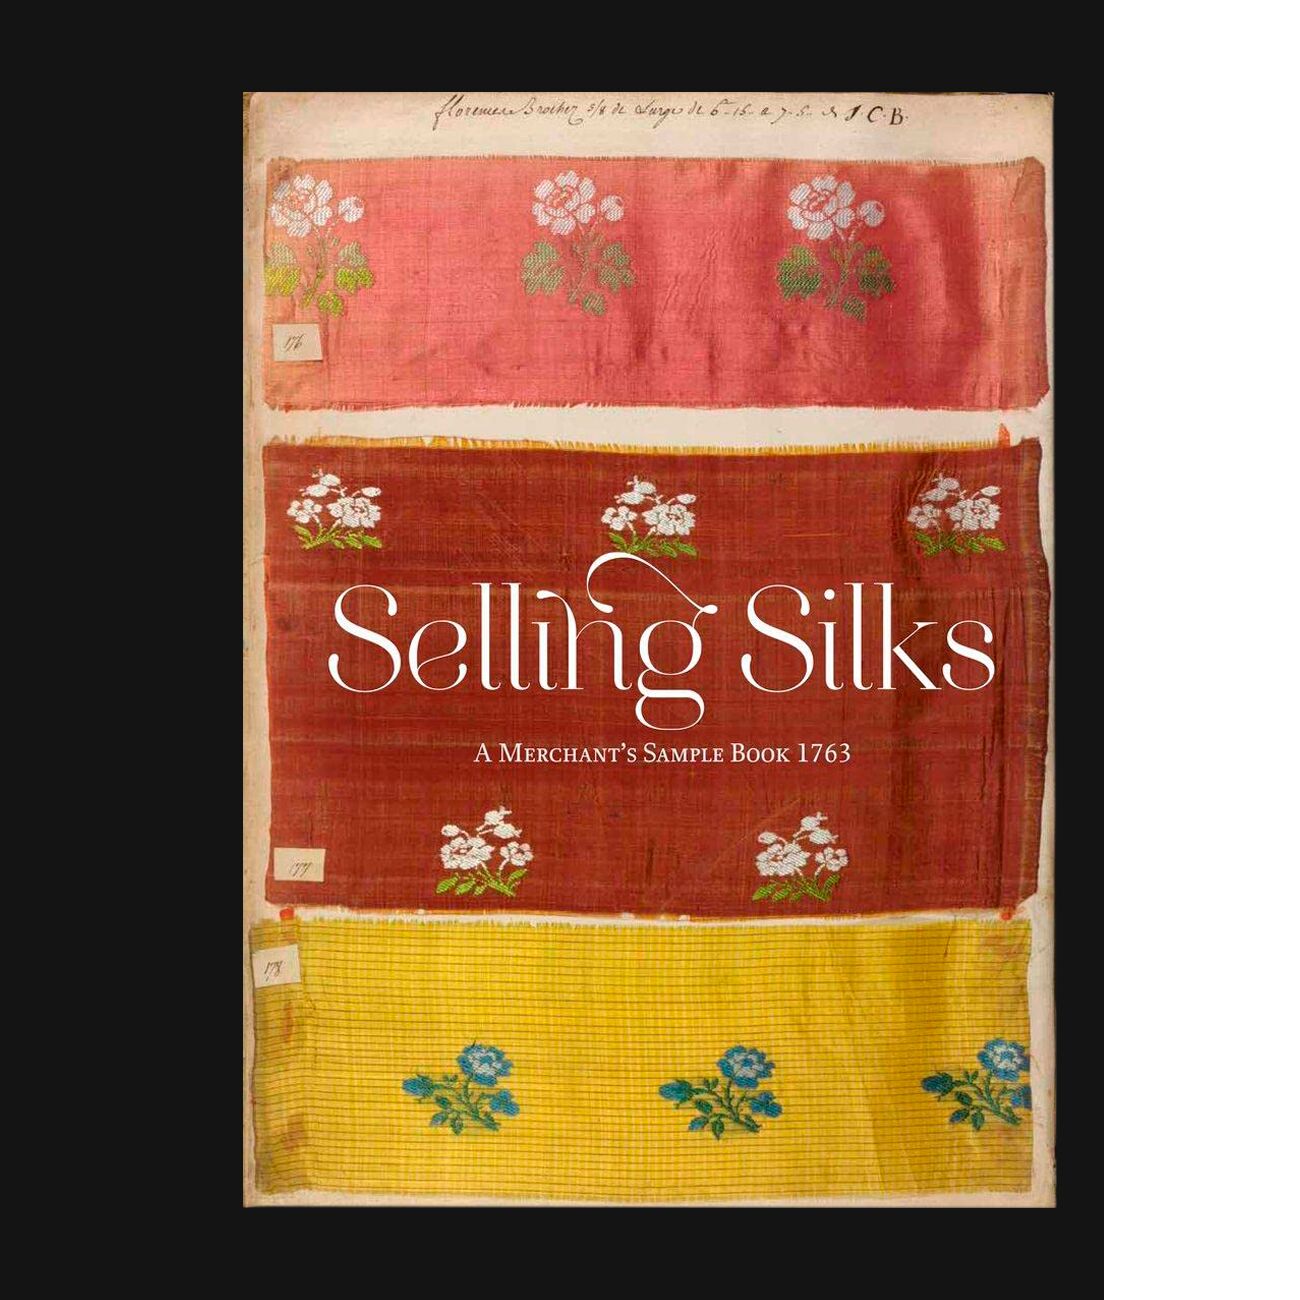 Selling Silks: A Merchant's Sample Book